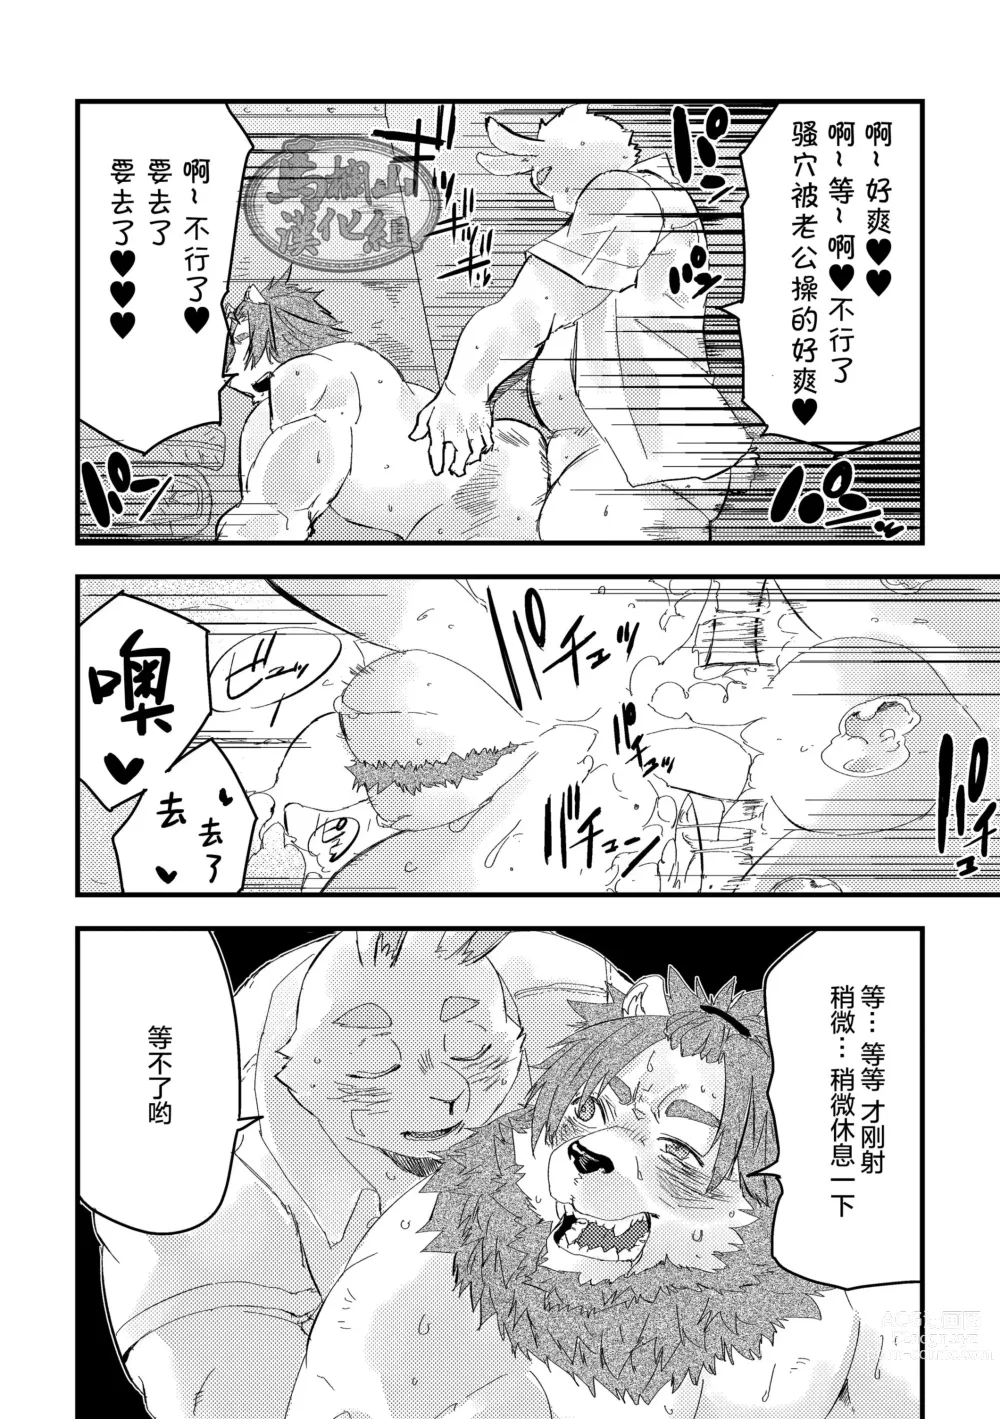 Page 21 of manga 獅子は兎を狩るのにも